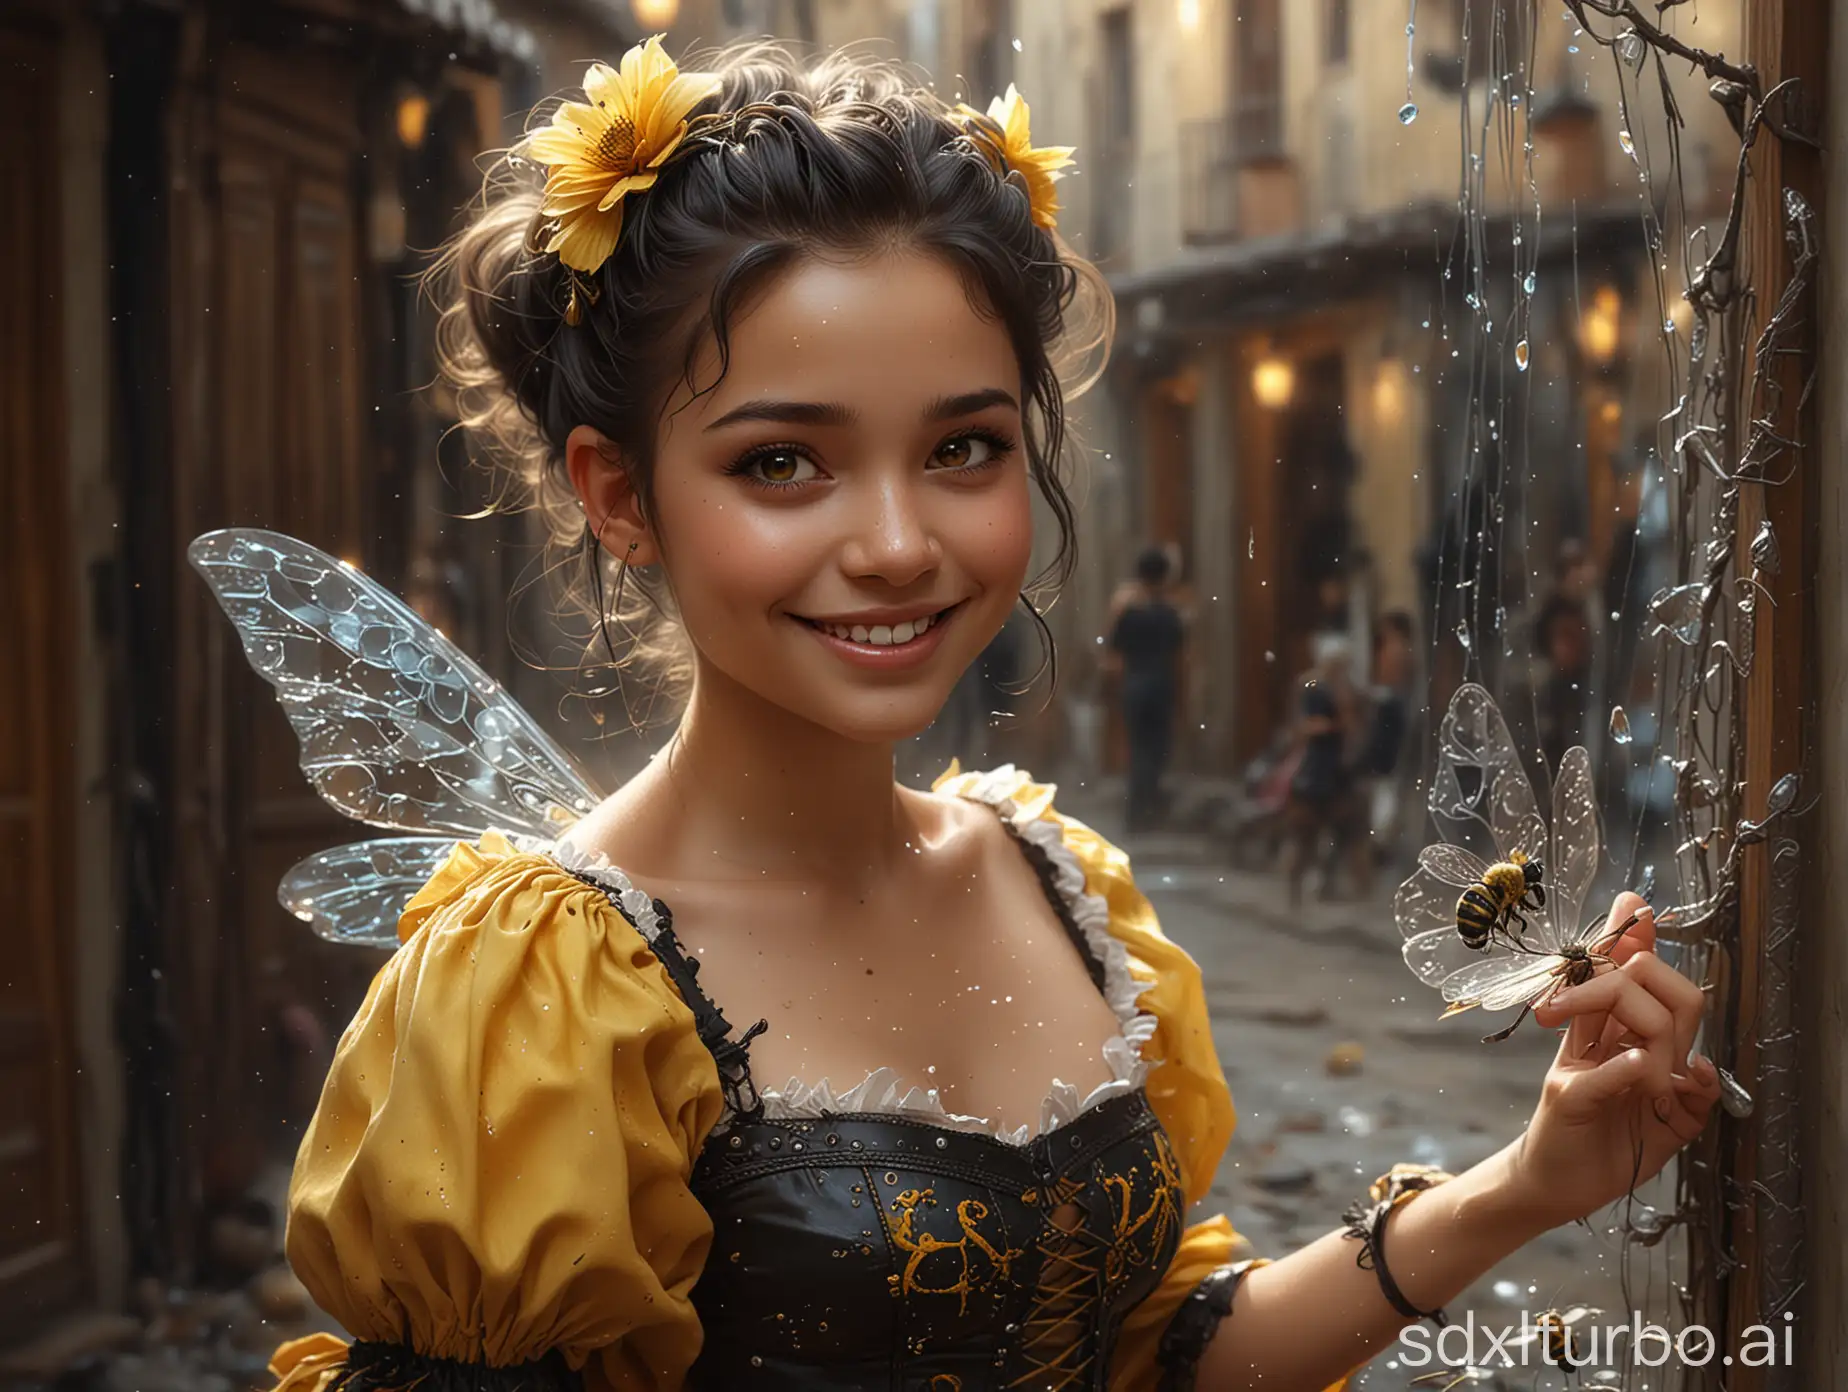 Cute-Women-in-Honey-Bee-Carnival-Dress-Luis-RoyoInspired-Detailed-Digital-Art